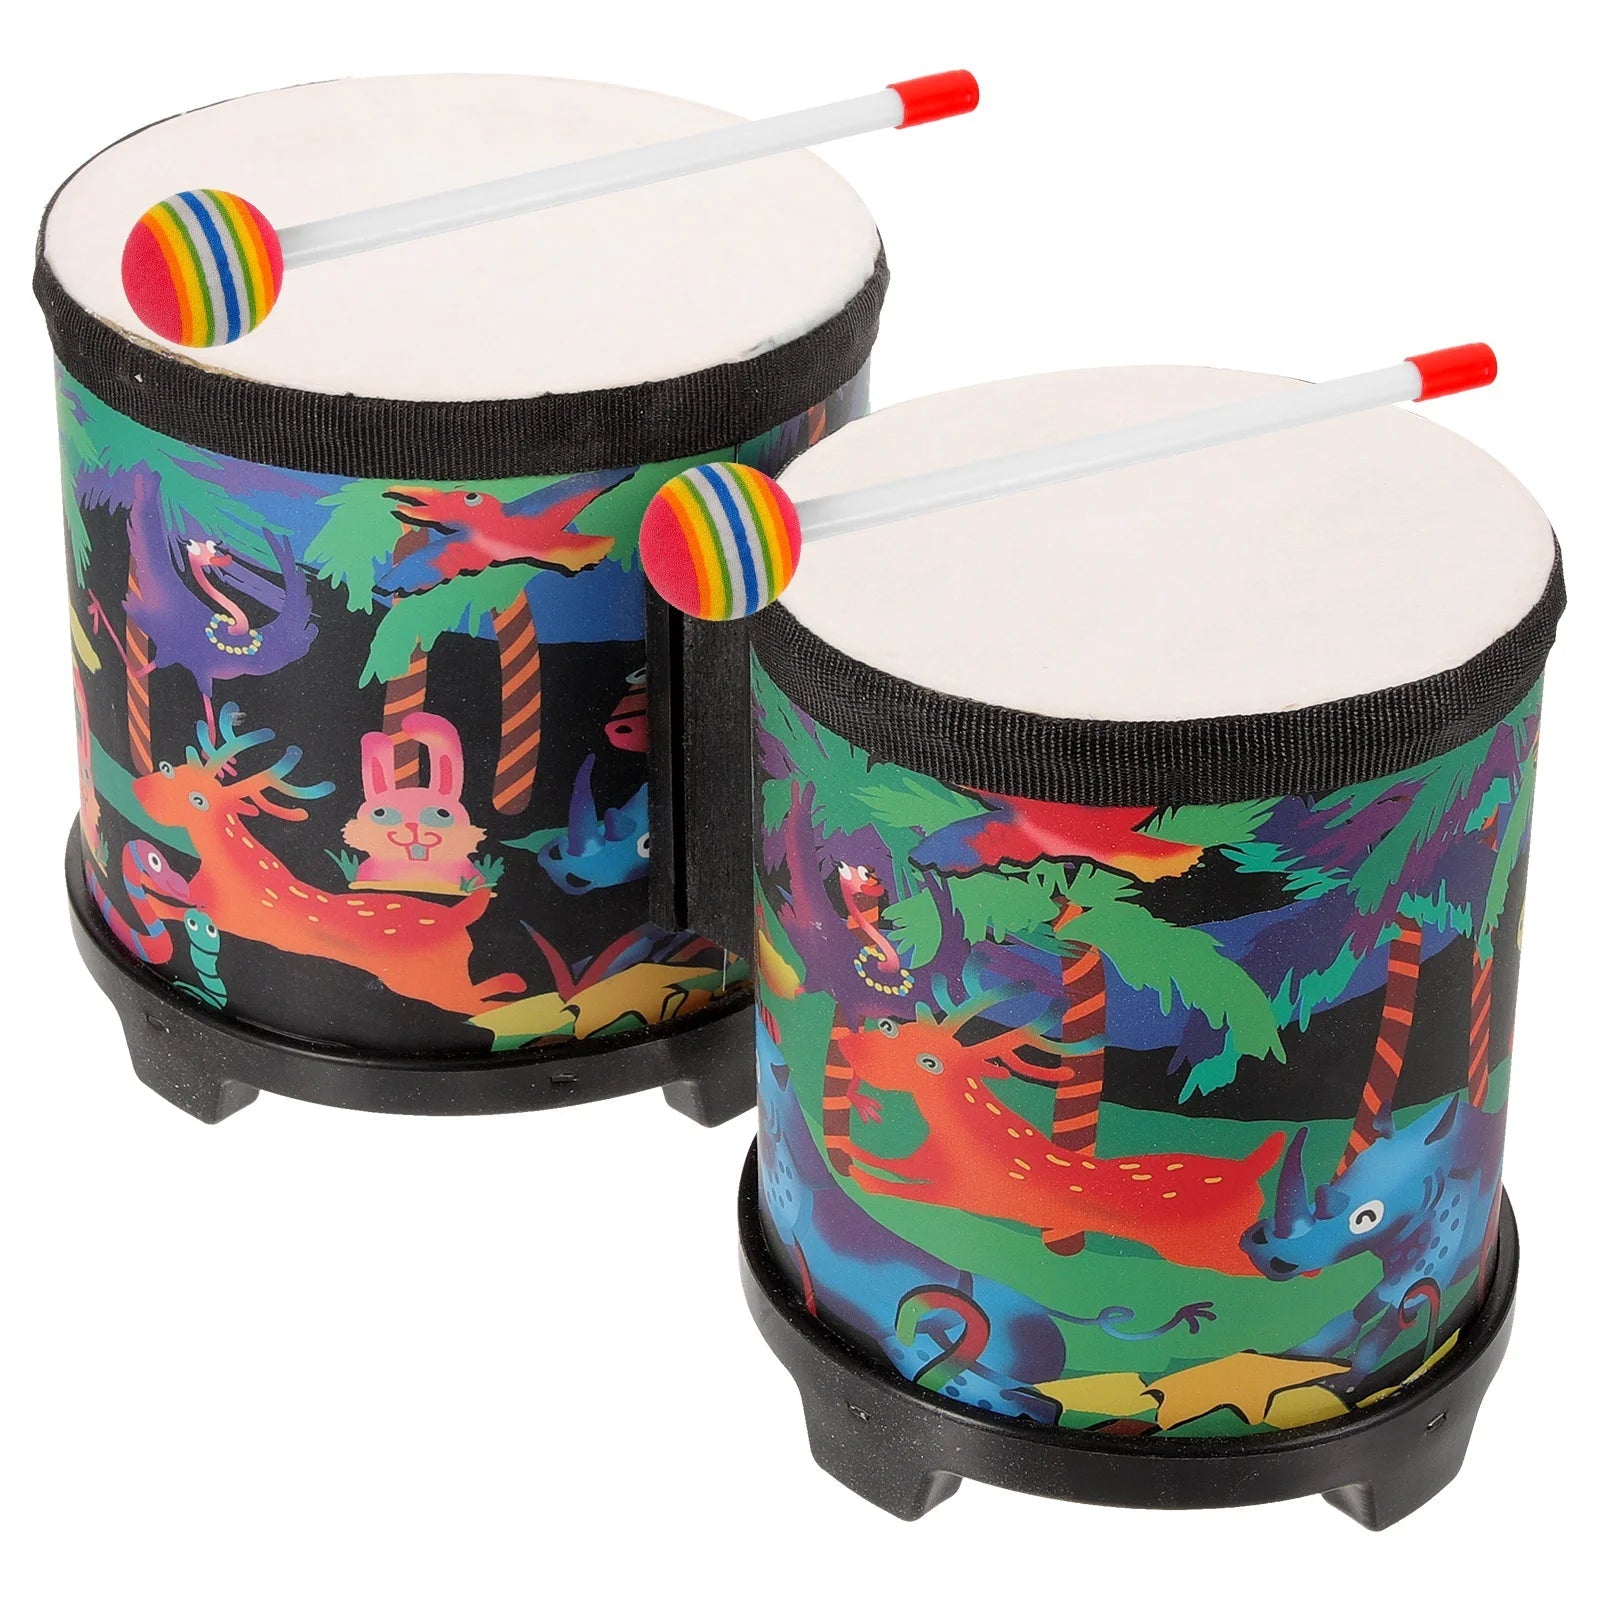 Toys Bongo Drums Adults Kids Ages 5-9 Percussion Instruments Aldult - ToylandEU